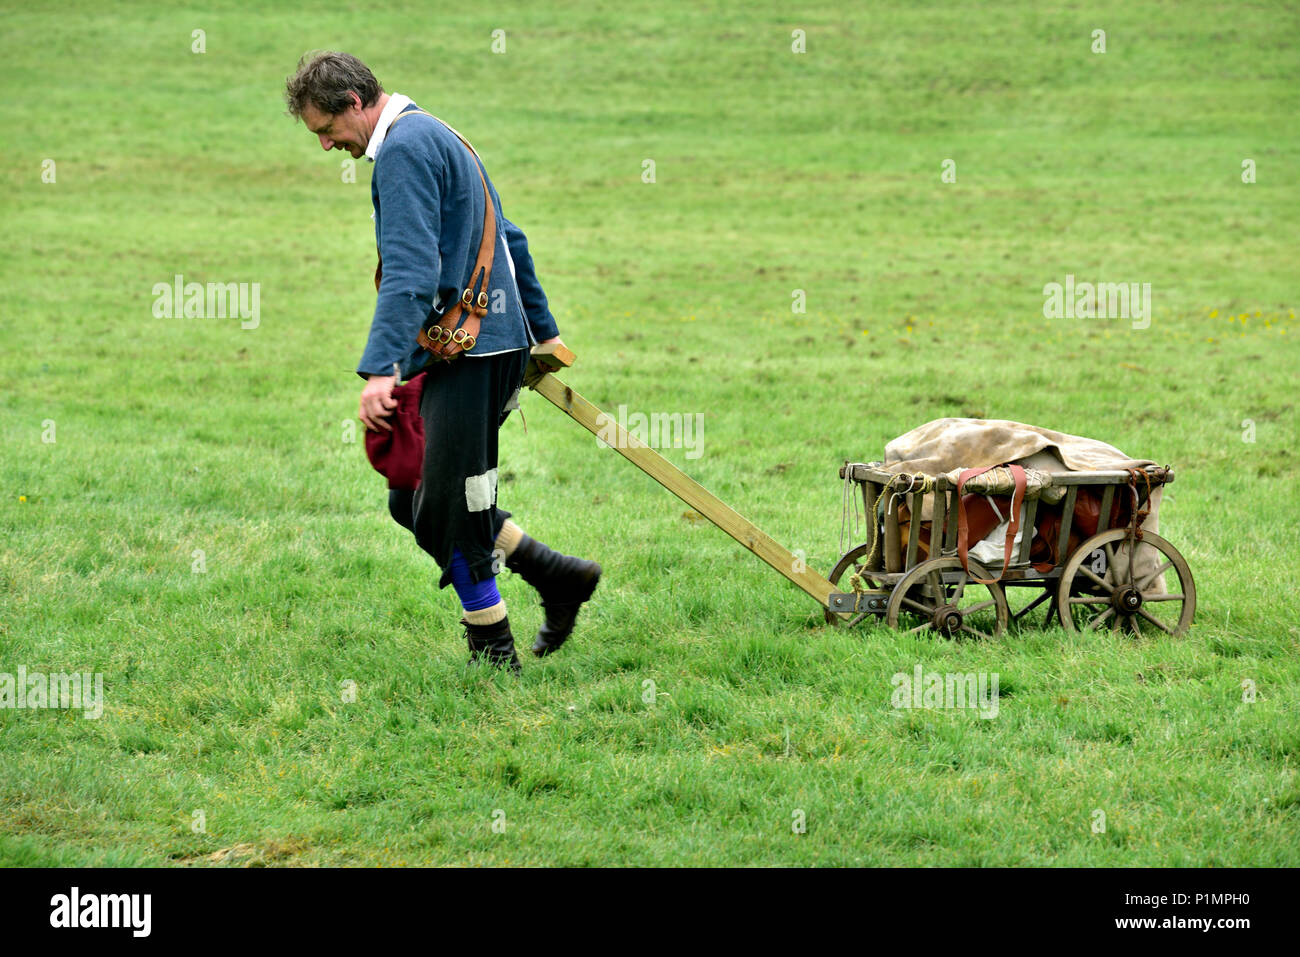 Man in 17th century costume pulling small handcart across grassy field Stock Photo